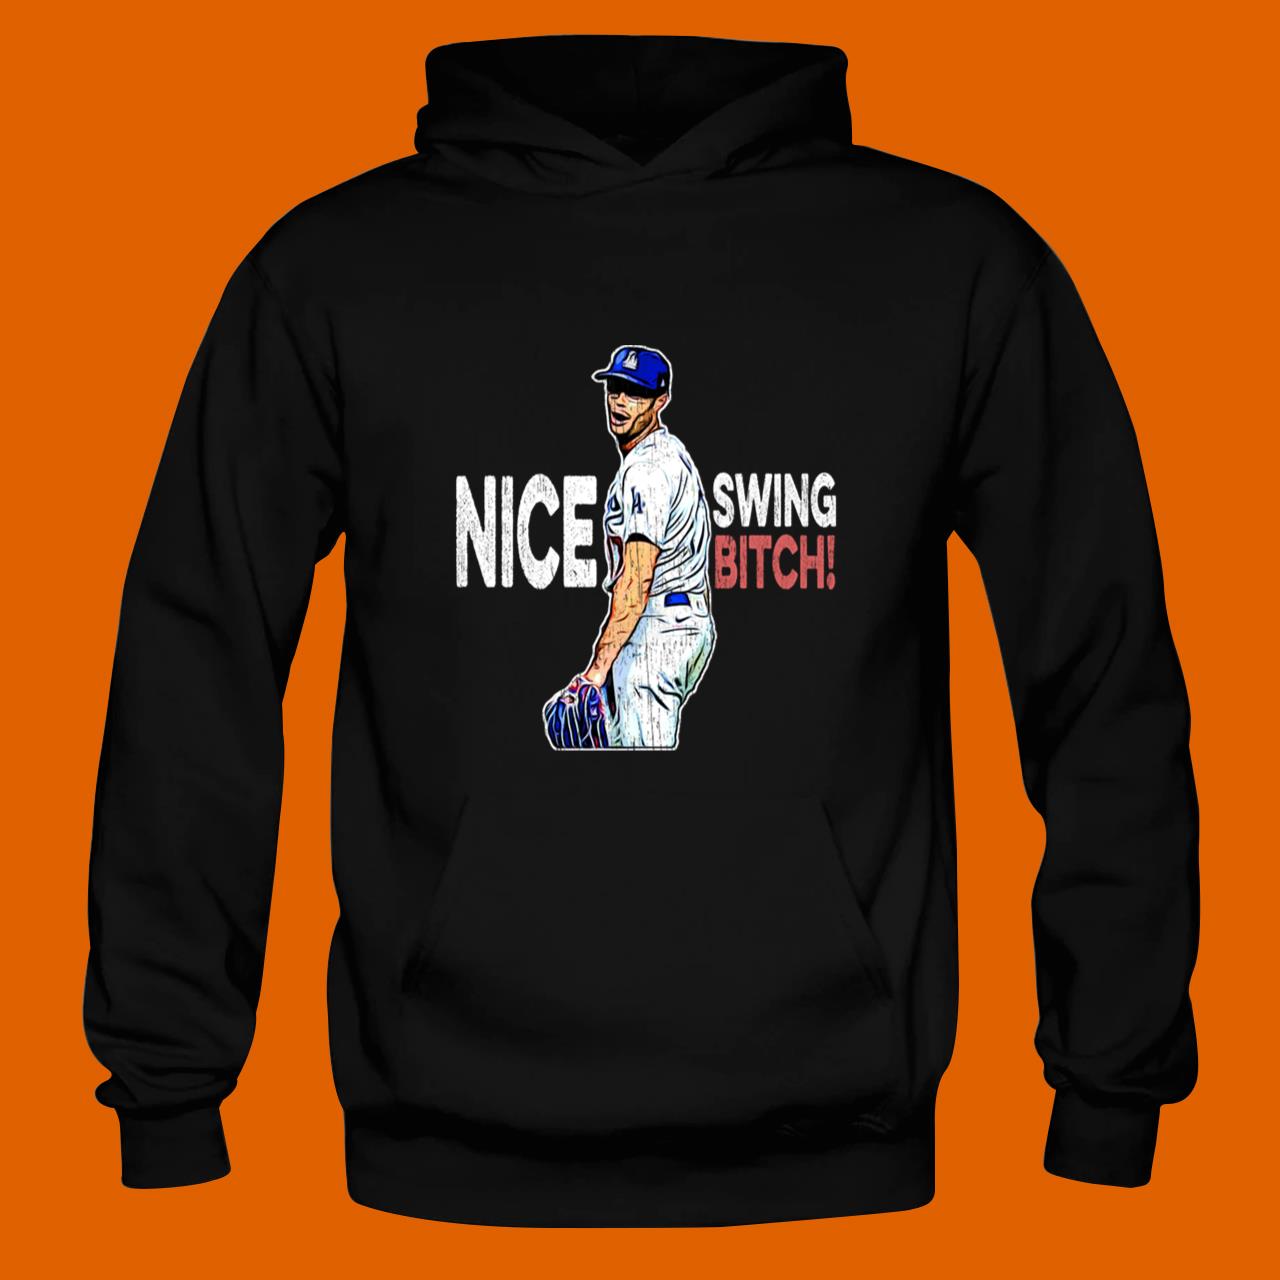 Los Angeles Dodgers Joe Kelly – Nice Swing BItch Funny T-Shirt